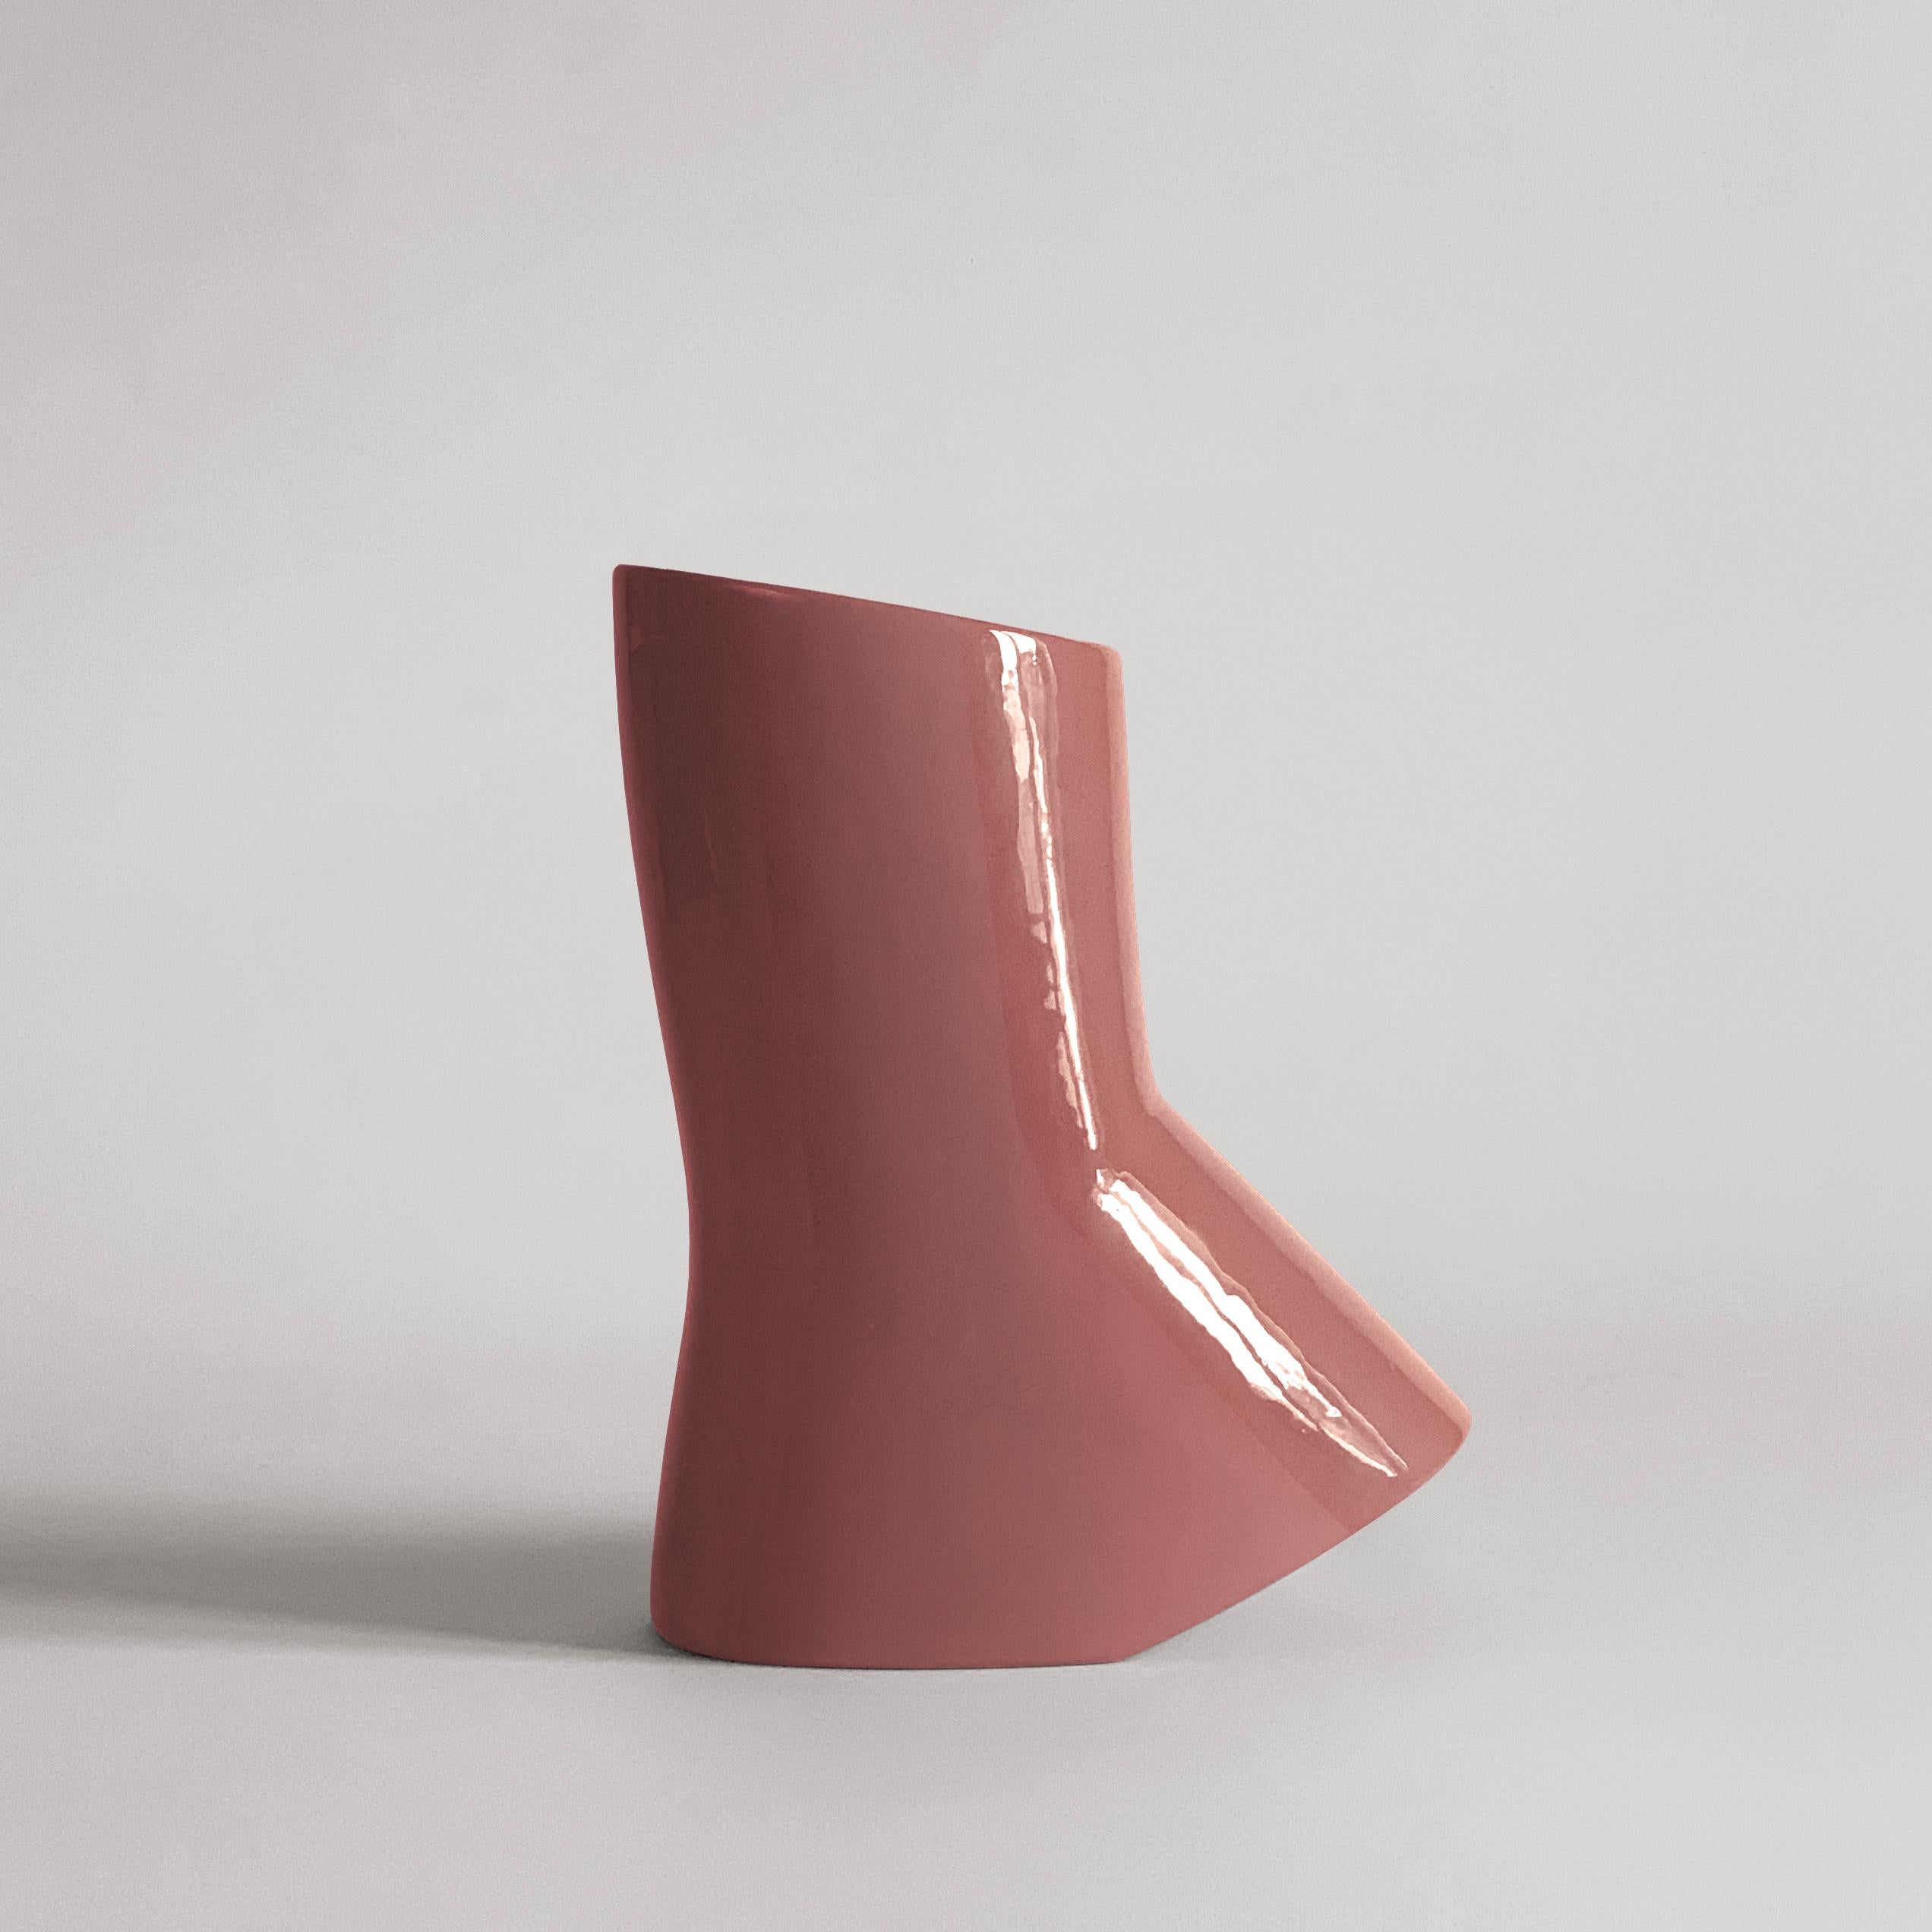 Set of 2 Menadi Ceramic Vases by Studio Zero For Sale 1